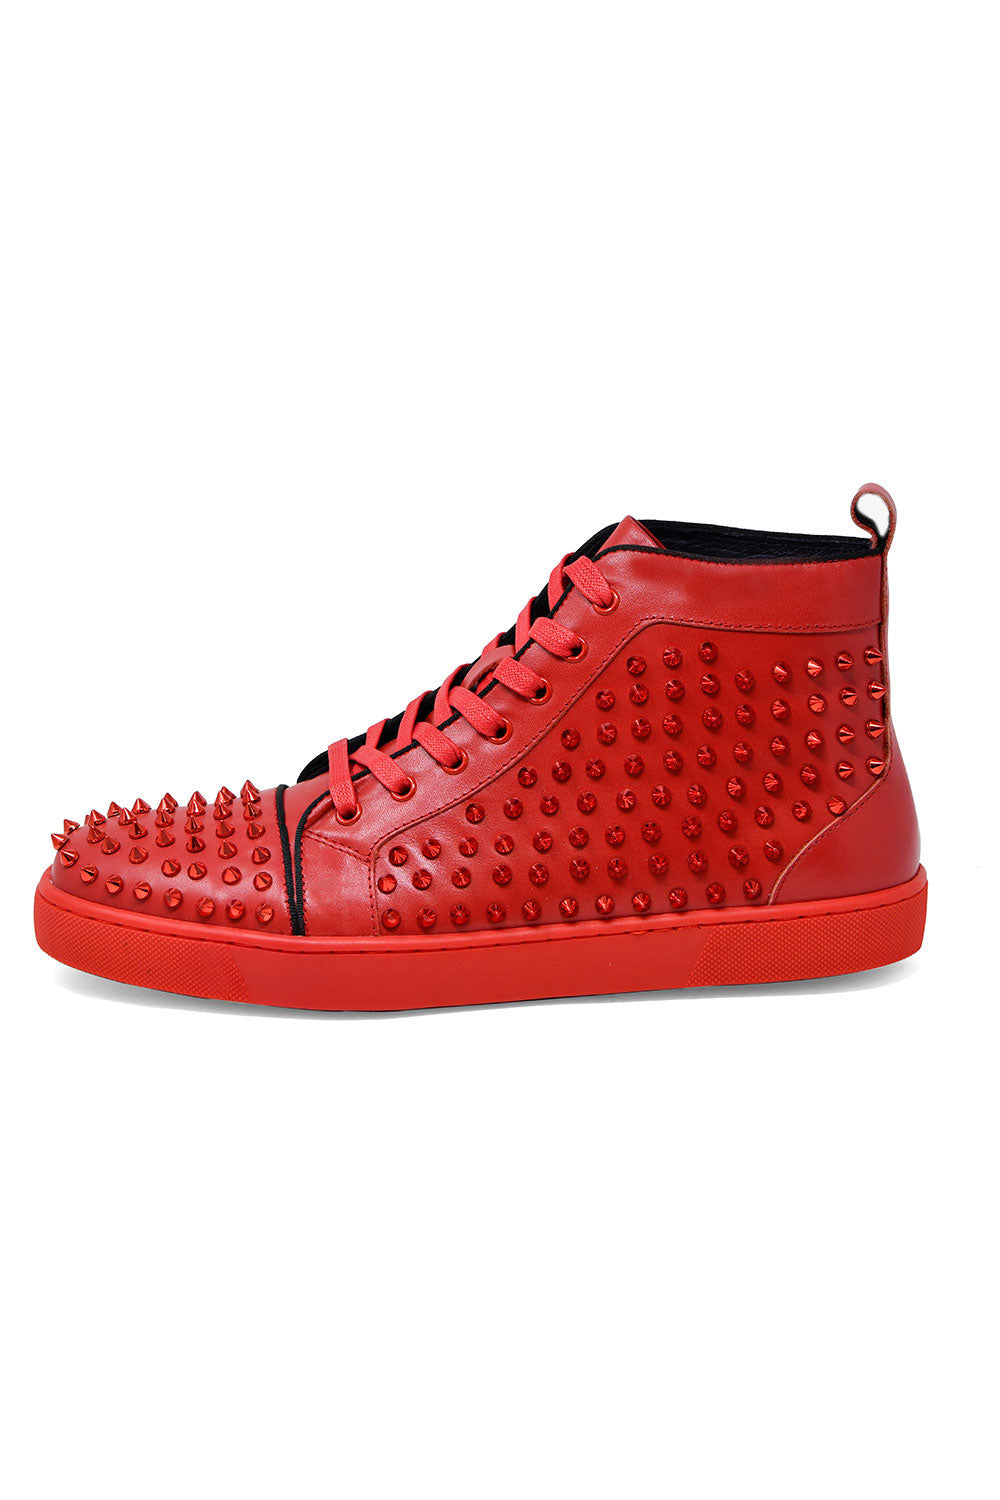 Barabas Men's Red Spike Pattern Design High-Top Luxury Sneakers SH713 Red